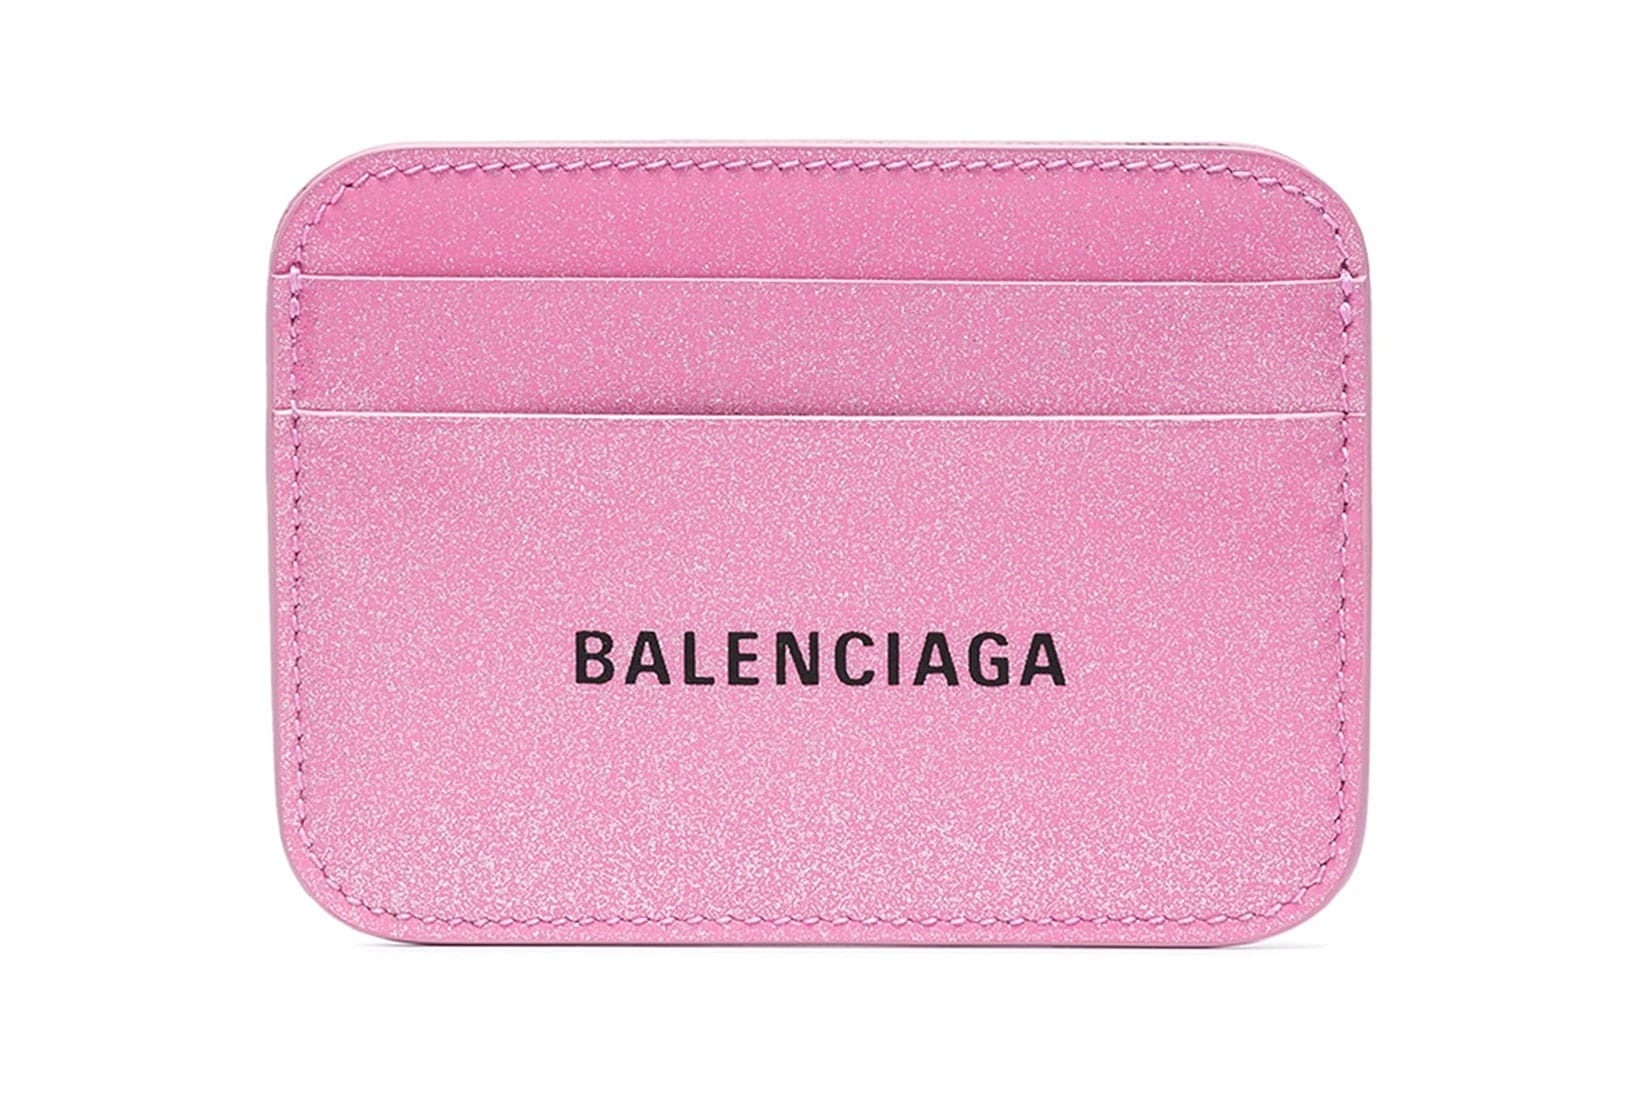 Balenciaga's Glitter Card Holder is a 